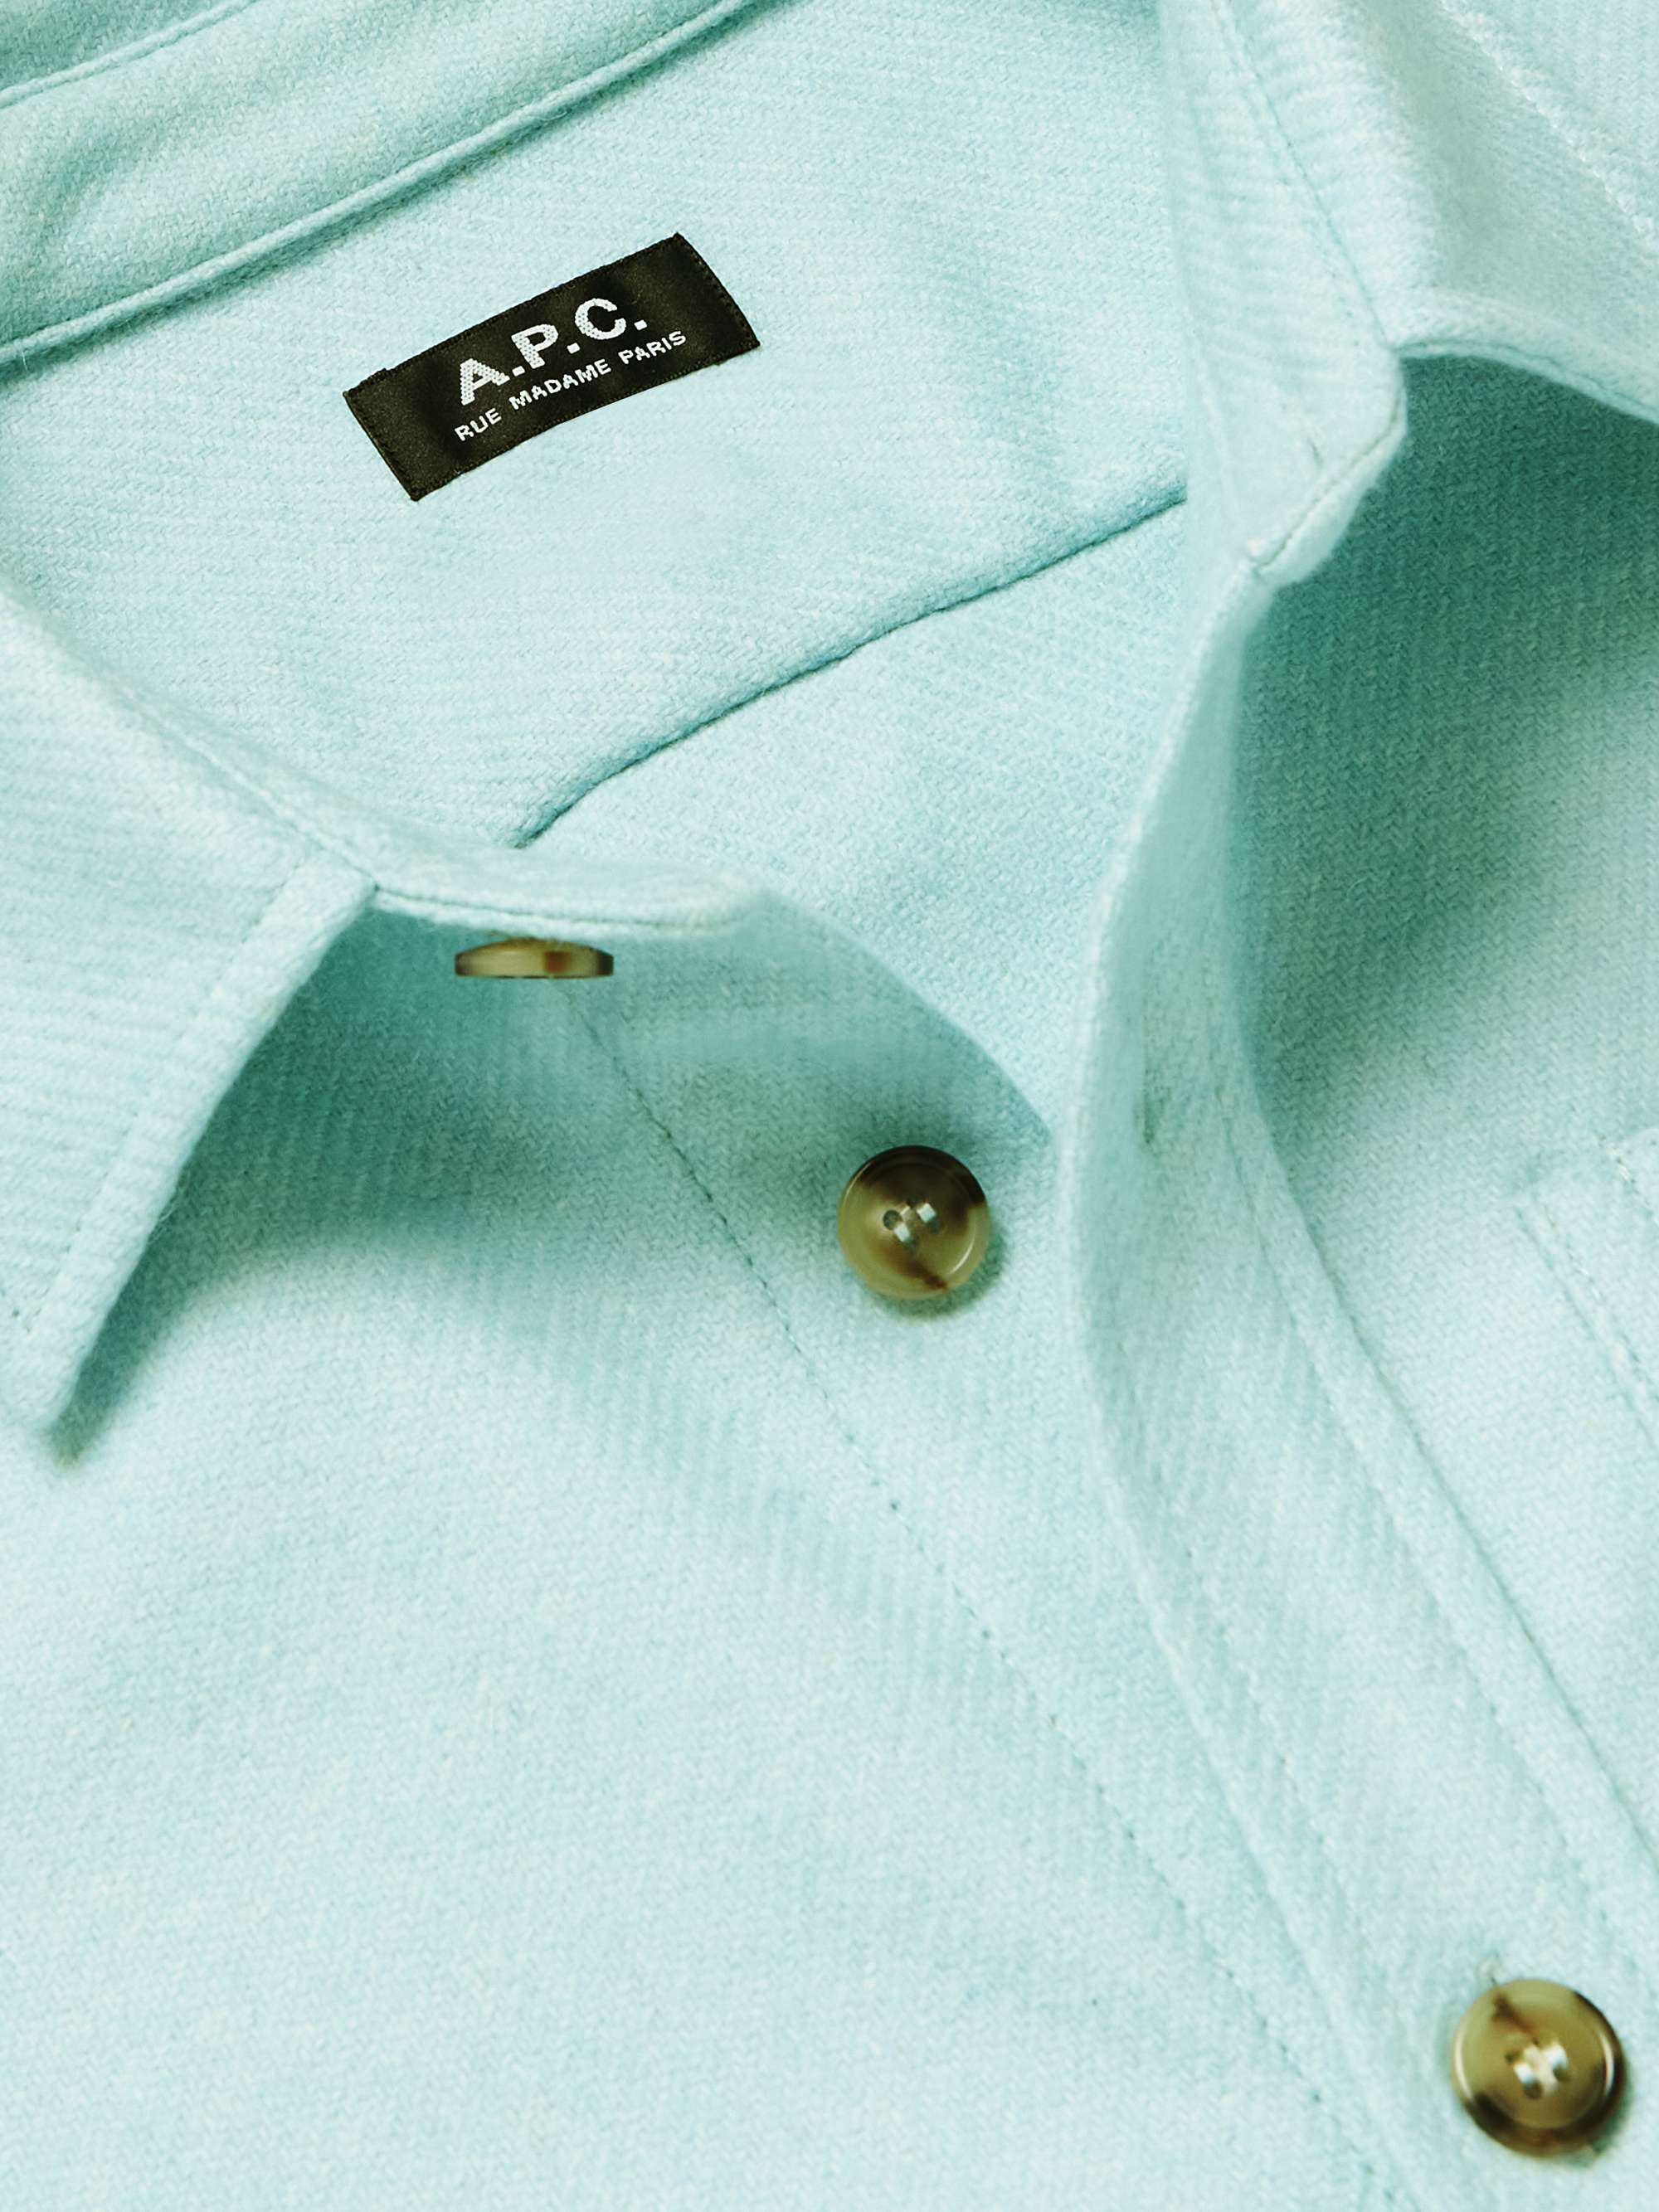 A.P.C. Basile Wool-Blend Overshirt